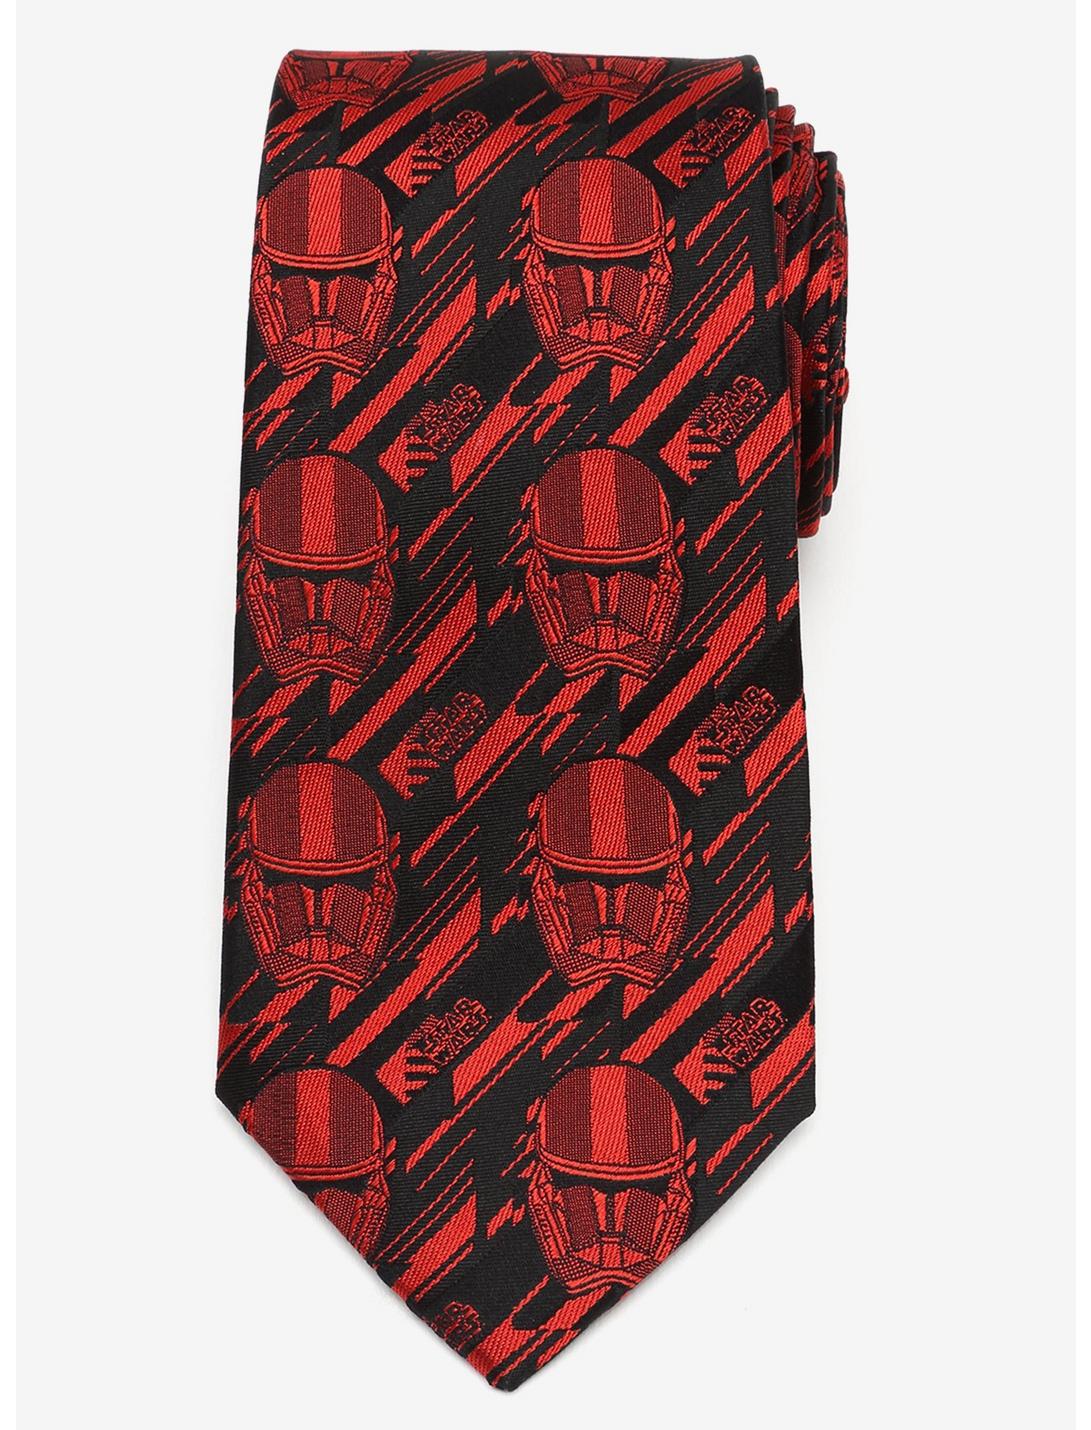 Star Wars Stormtrooper Red Tie, , hi-res